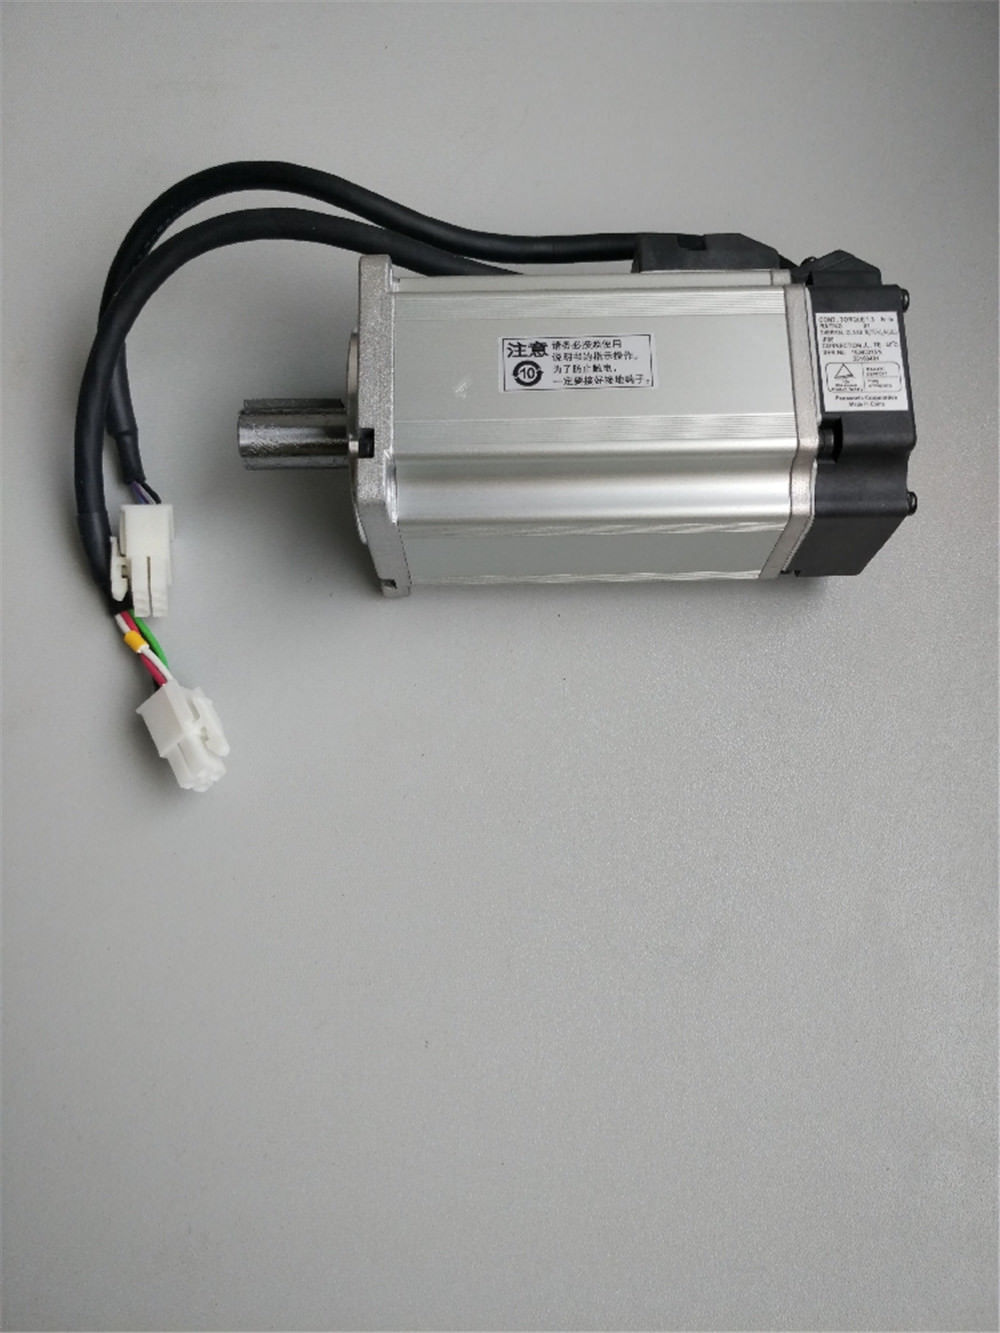 Brand New PANASONIC AC Servo motor MHMD042P1U in box - Click Image to Close